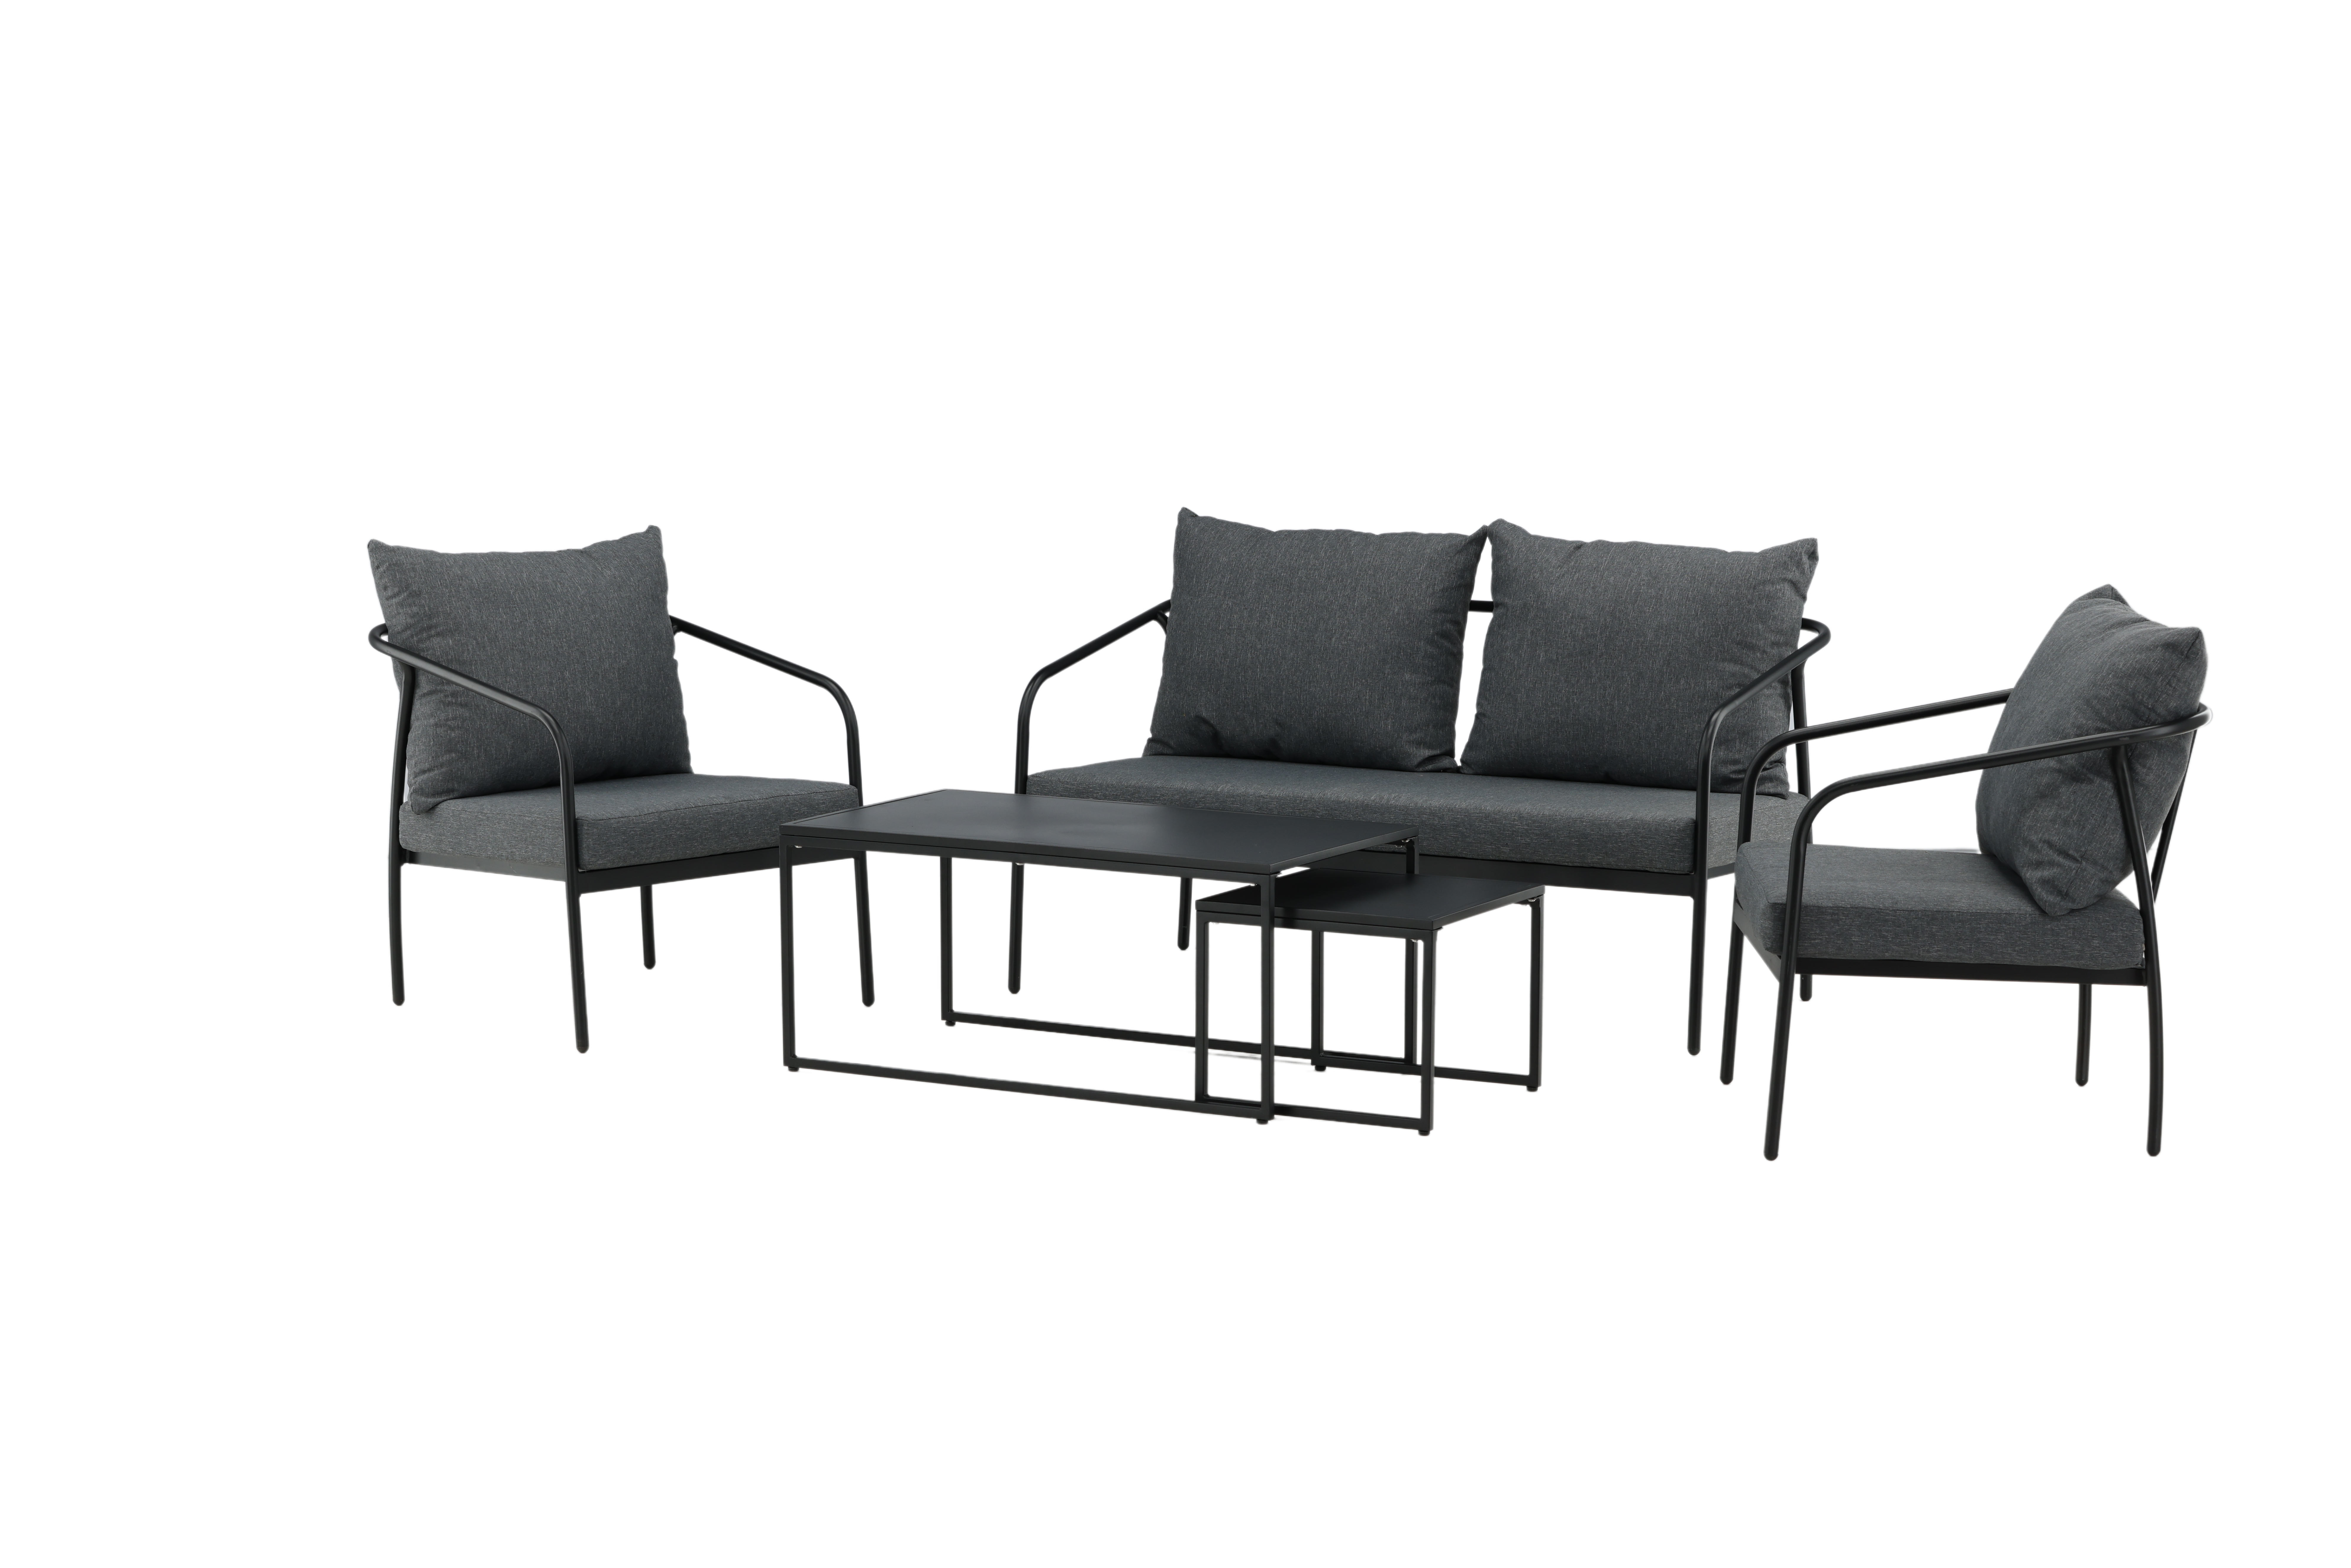 Venture Design - Sopot Garden Lounge Set with Cushions - Aluminium - Black/Grey (2044-408) - Bundle